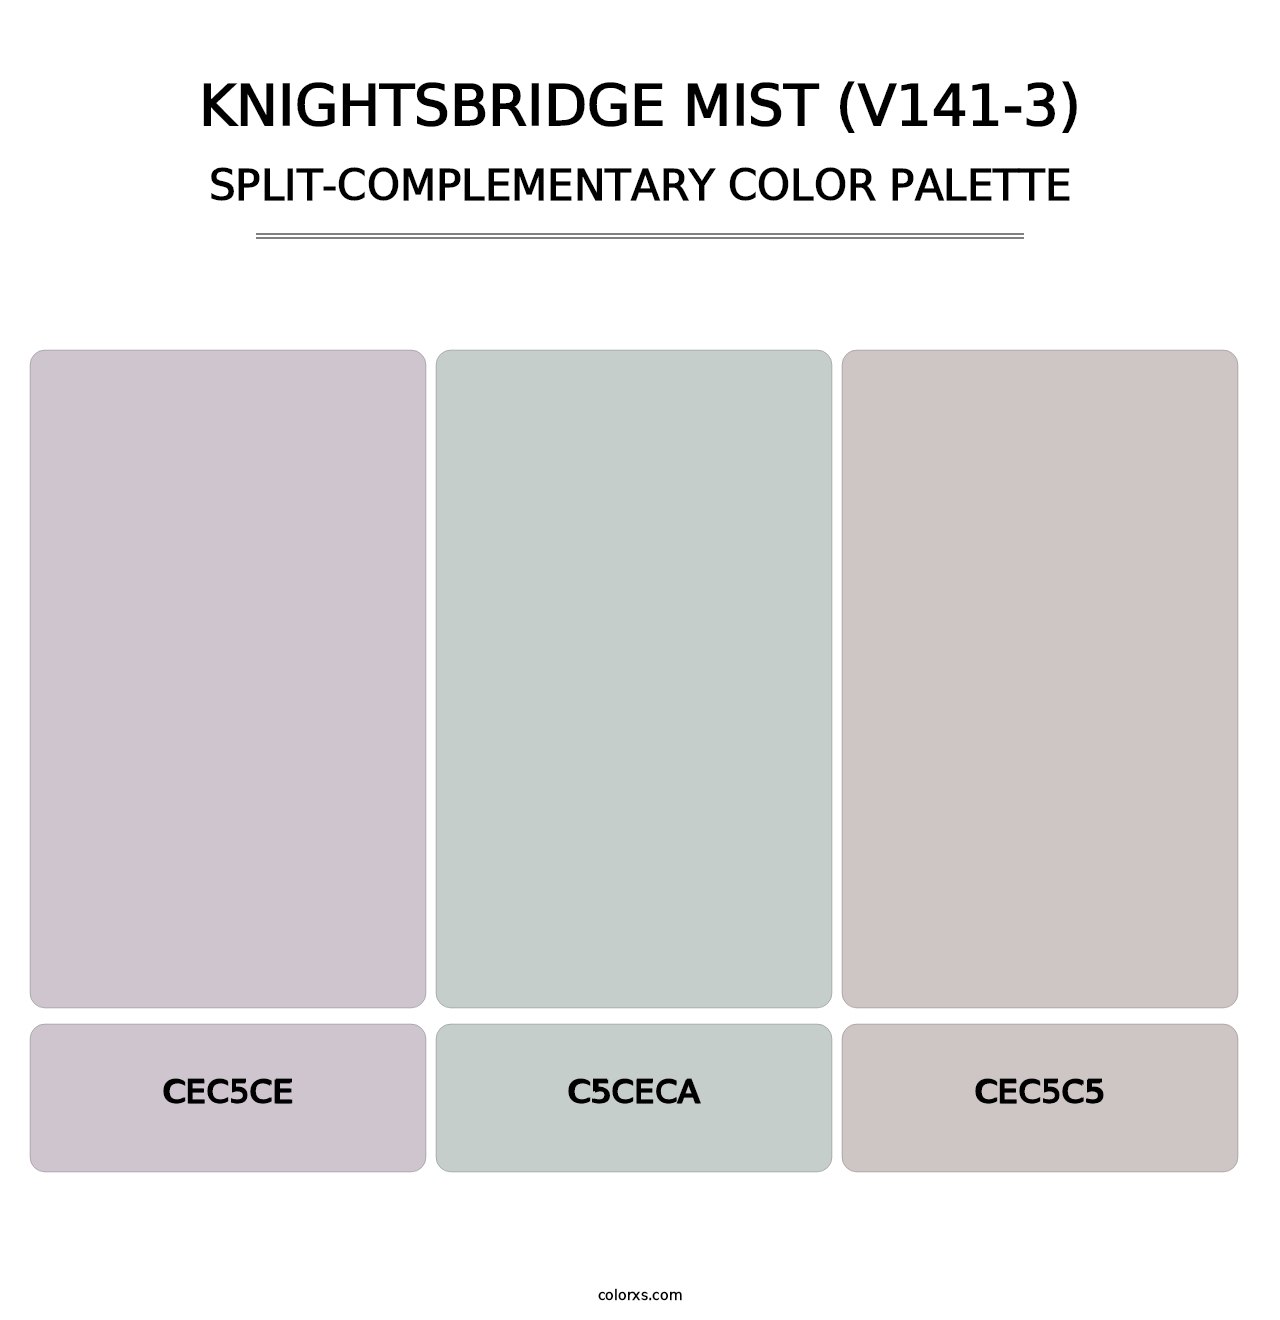 Knightsbridge Mist (V141-3) - Split-Complementary Color Palette